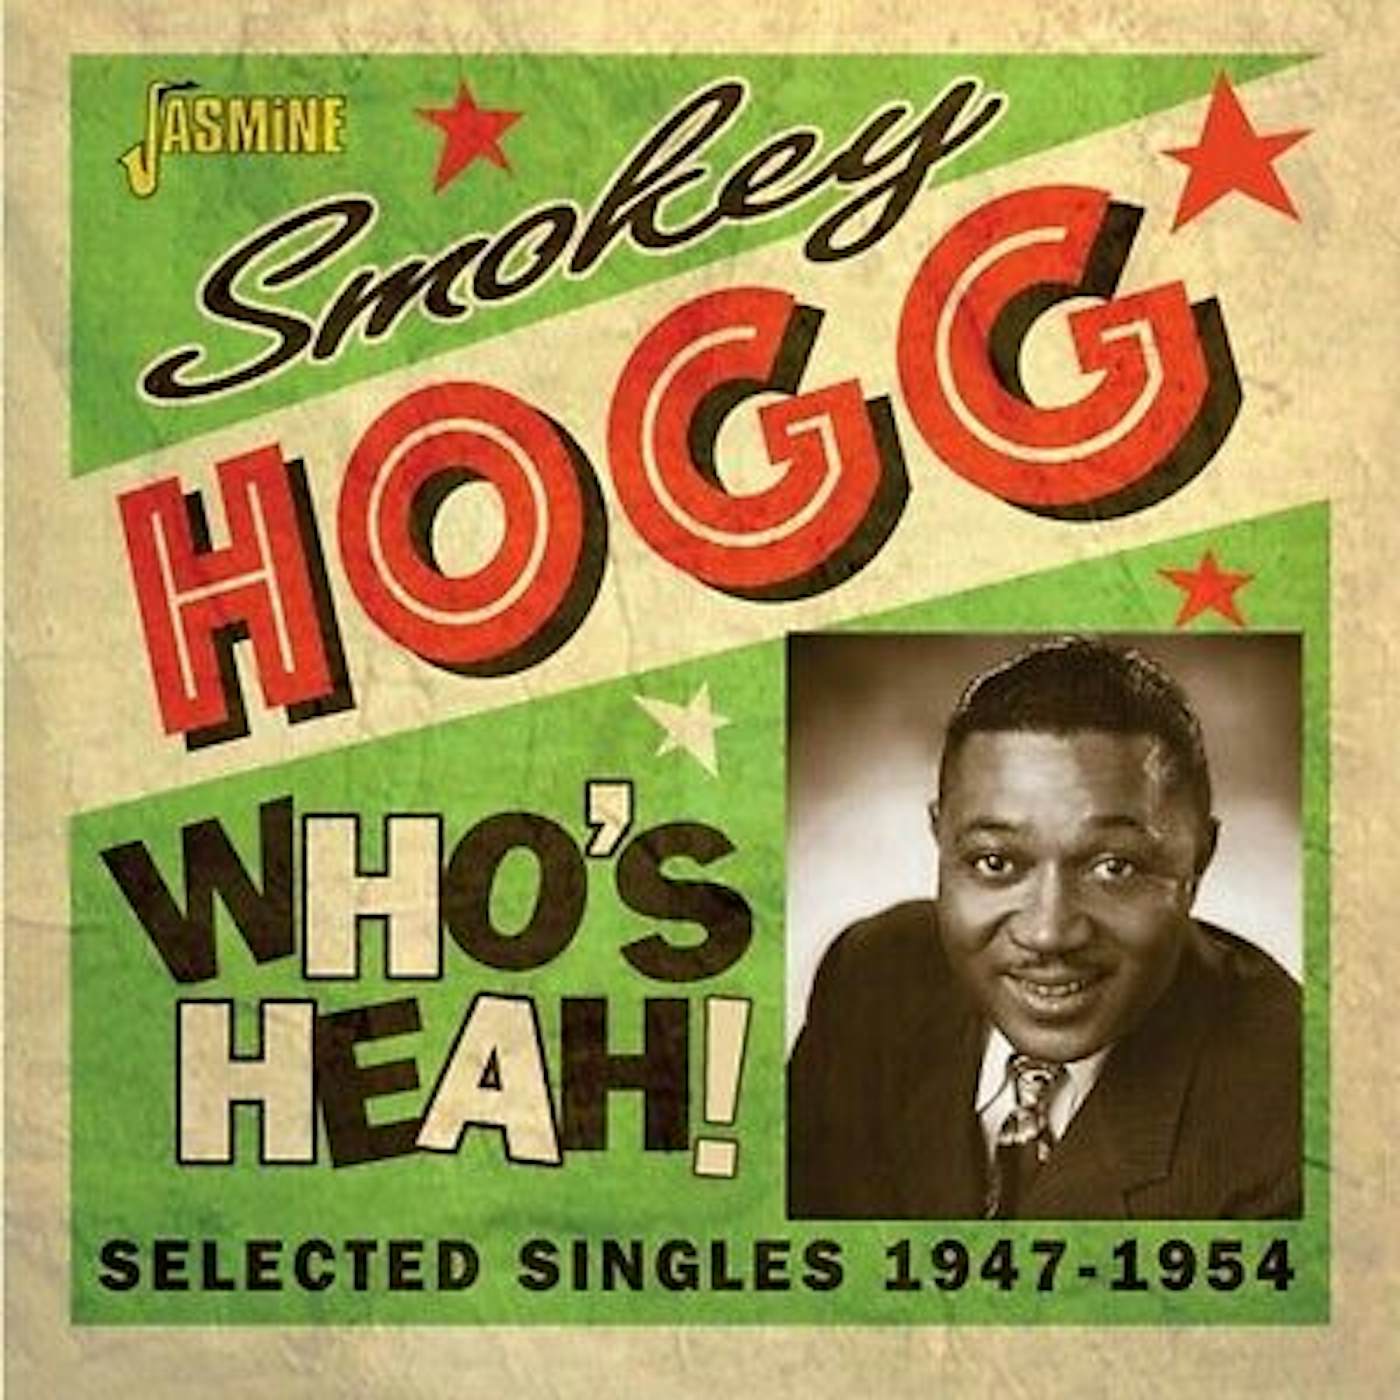 Smokey Hogg WHO'S HEAH: SELECTED SINGLES 1947-1954 CD